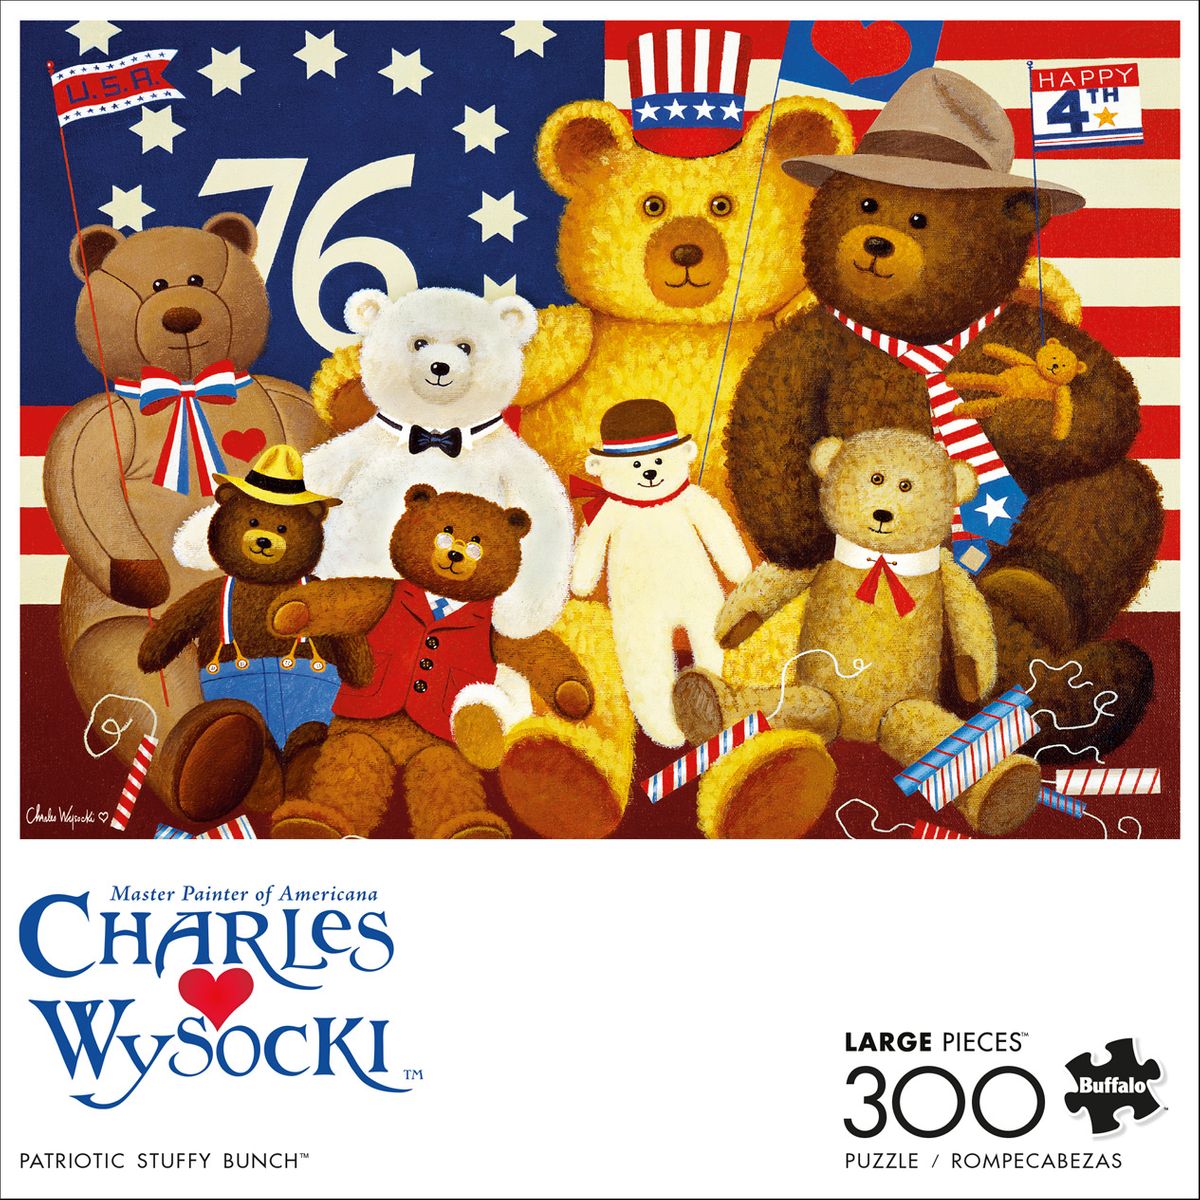 [RDY] [送料無料] Buffalo Games Charles Wysocki - Patriotic Stuffy Bunch - 300ピース ジグソーパズル [楽天海外通販] | Buffalo Games Charles Wysocki - Patriotic Stuffy Bunch - 300 Pieces Jigsaw Puzzle